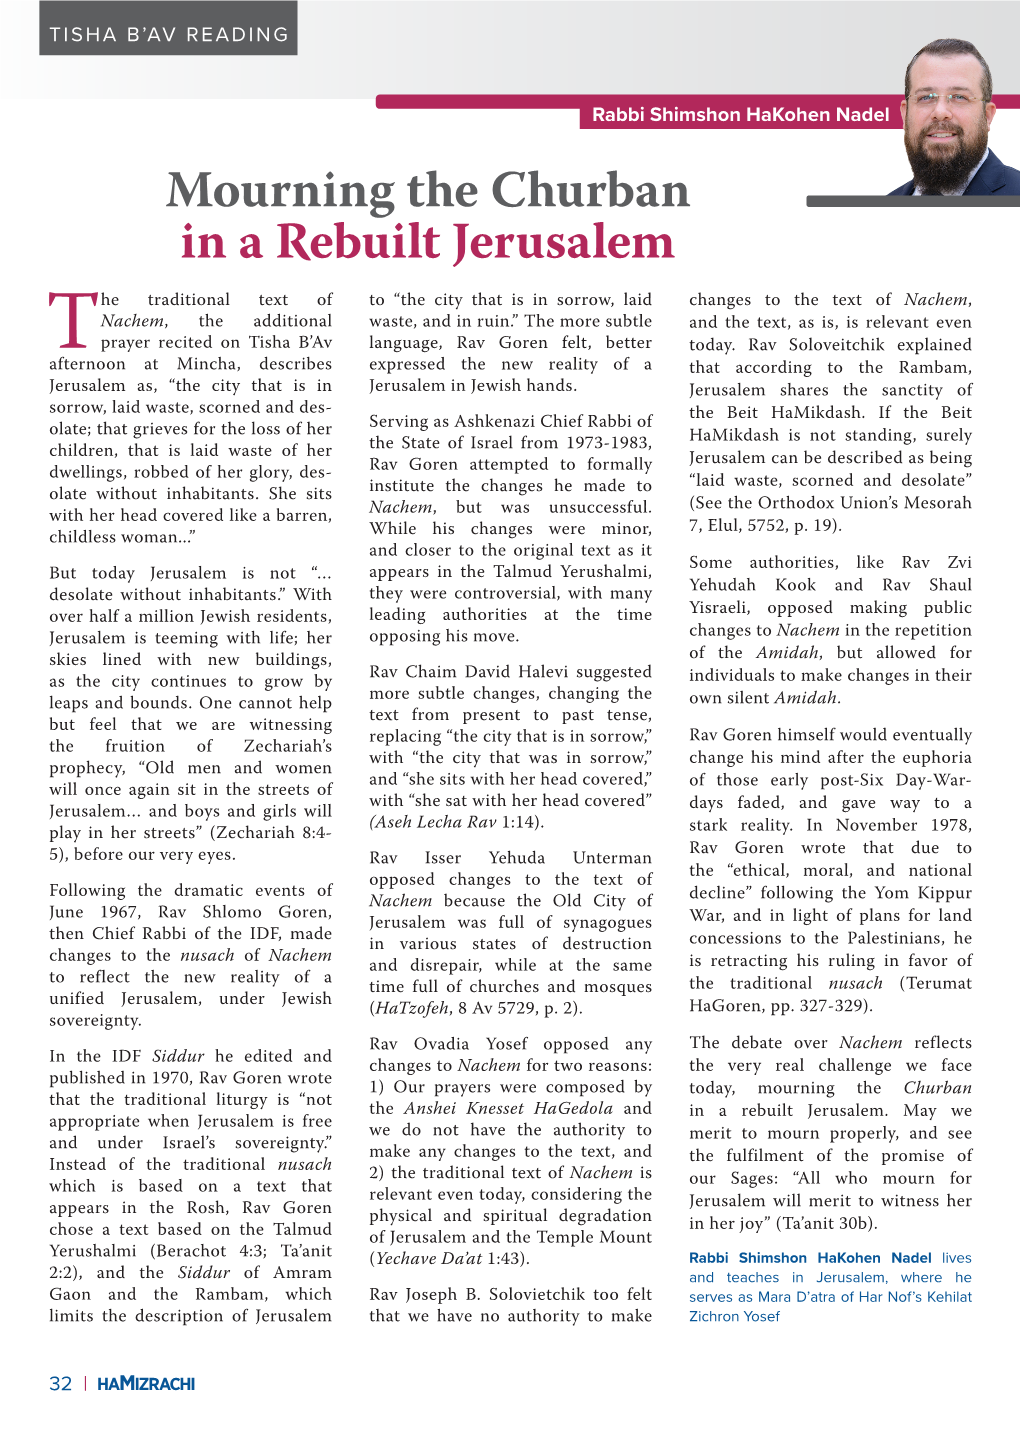 Mourning the Churban in a Rebuilt Jerusalem